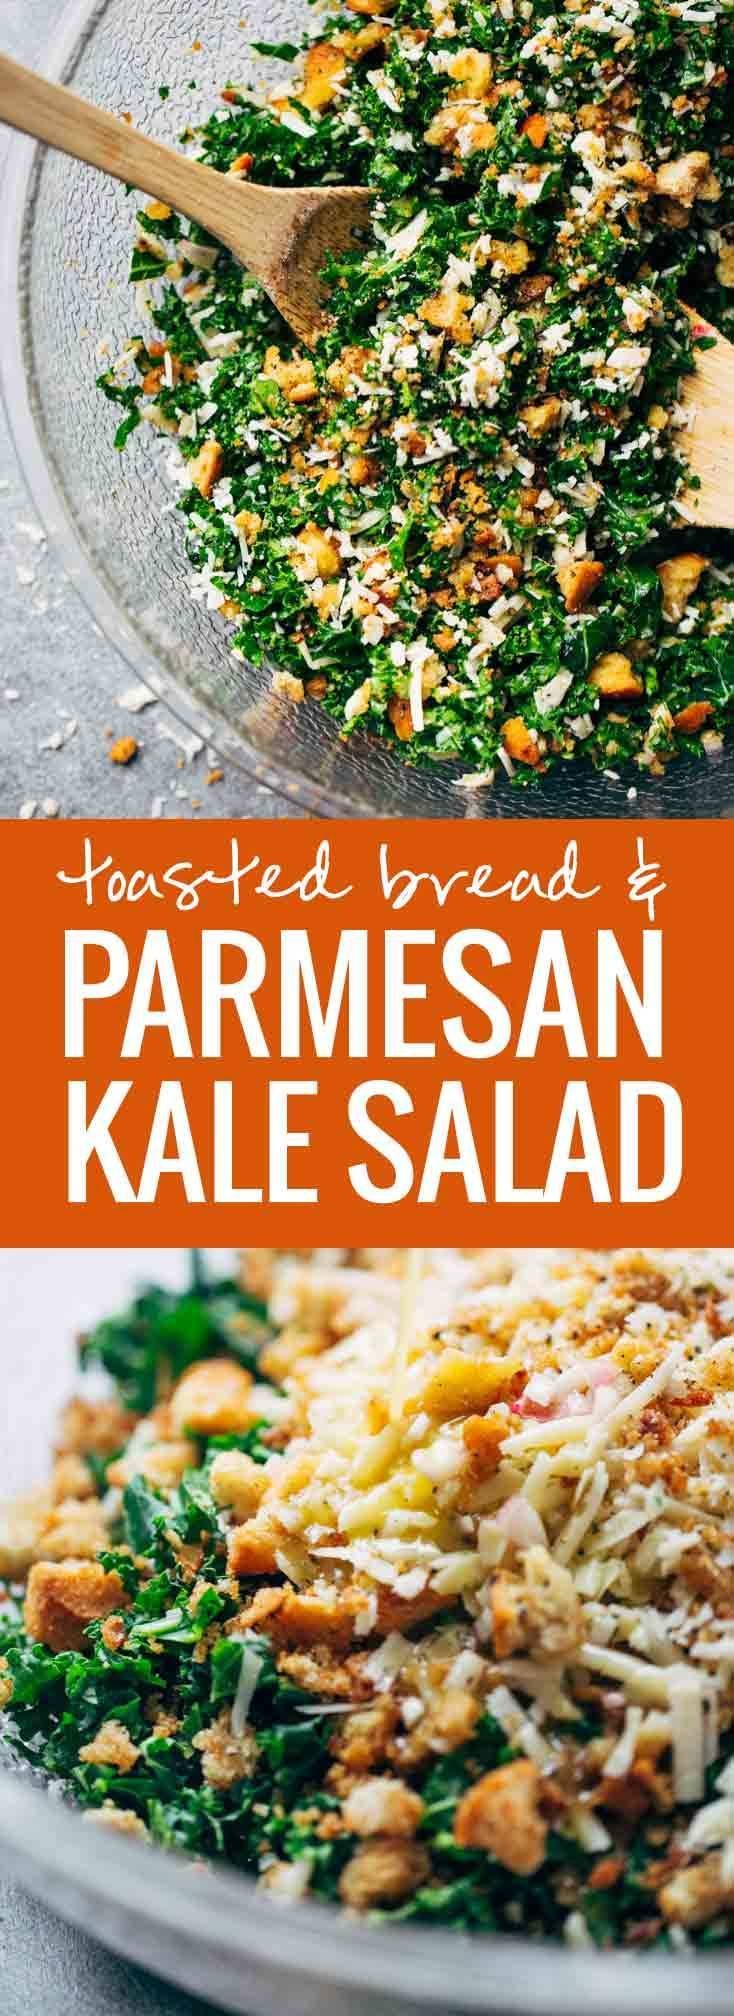 kale-salad-pinterest-1